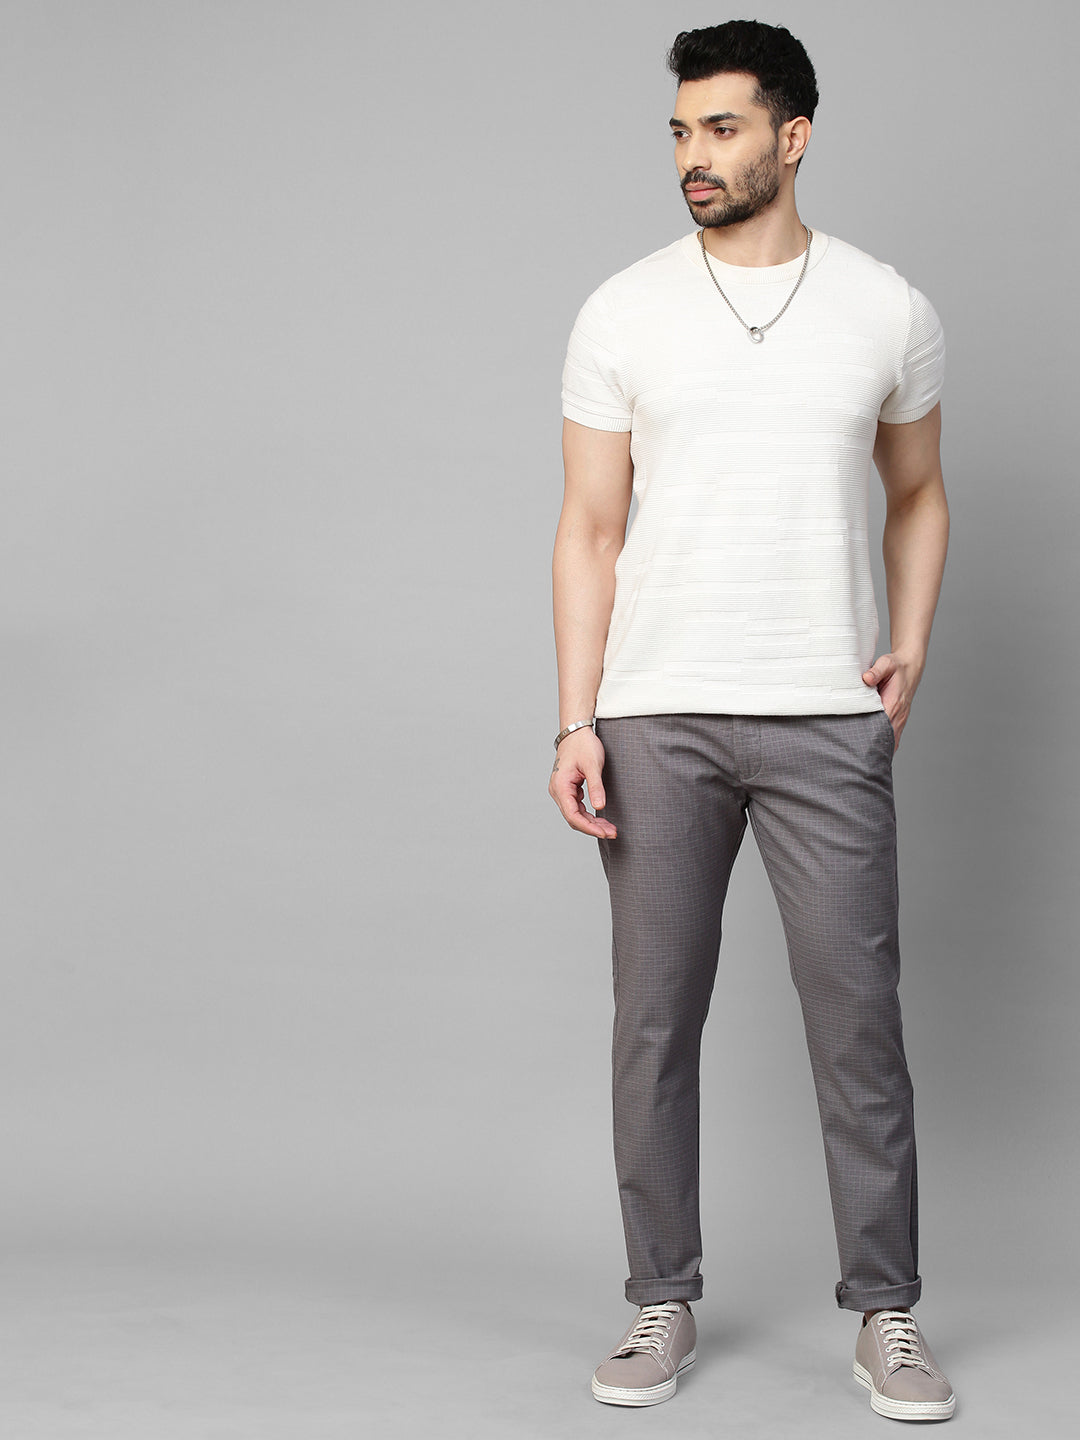 Genips Men's Grey Cotton Stretch Caribbean Slim Fit Self Design Trouse